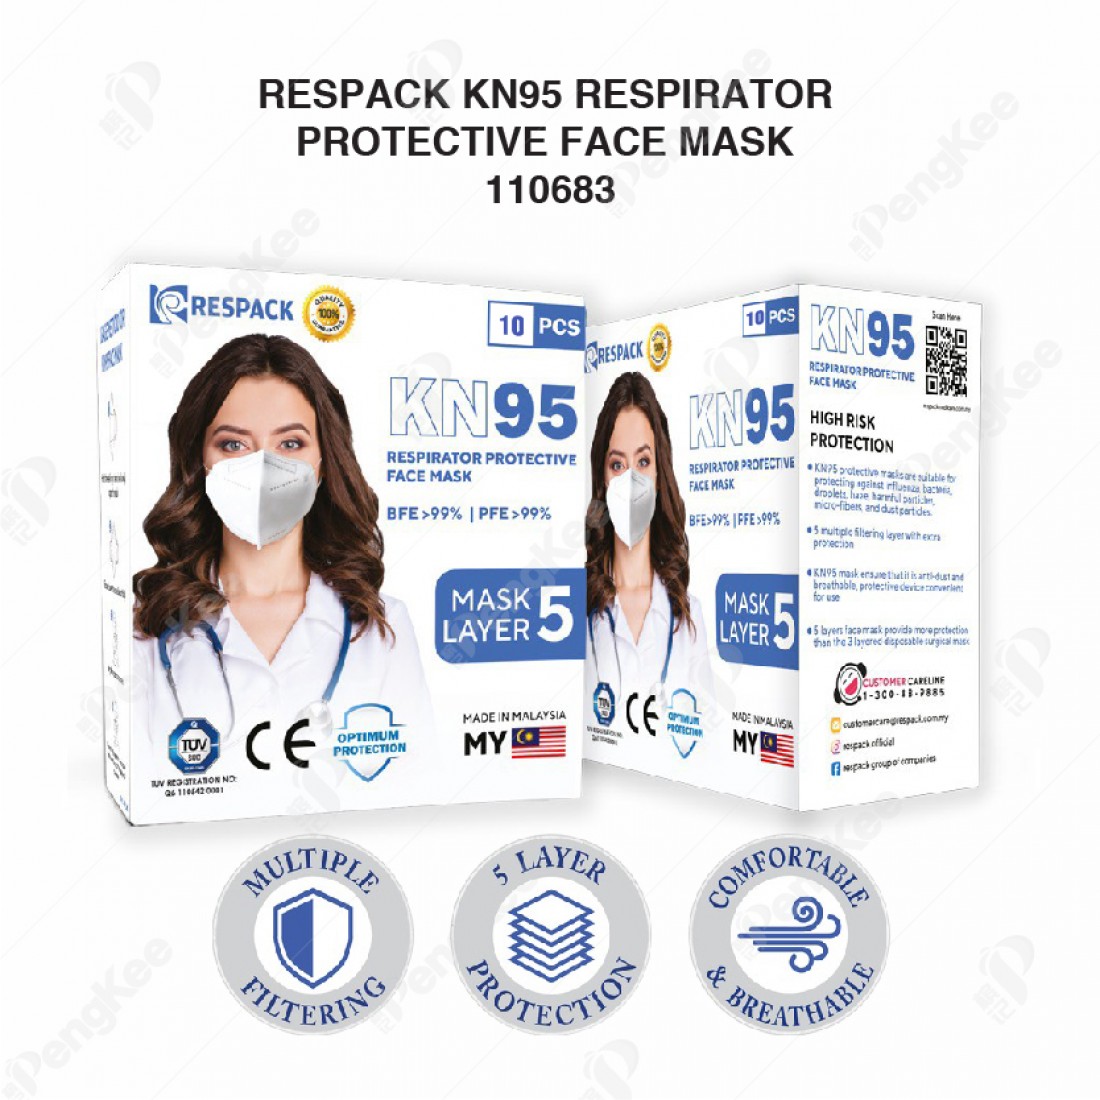 RESPACK KN95 RESPIRATOR PROTECTIVE FACE MASK 10'S/BOX